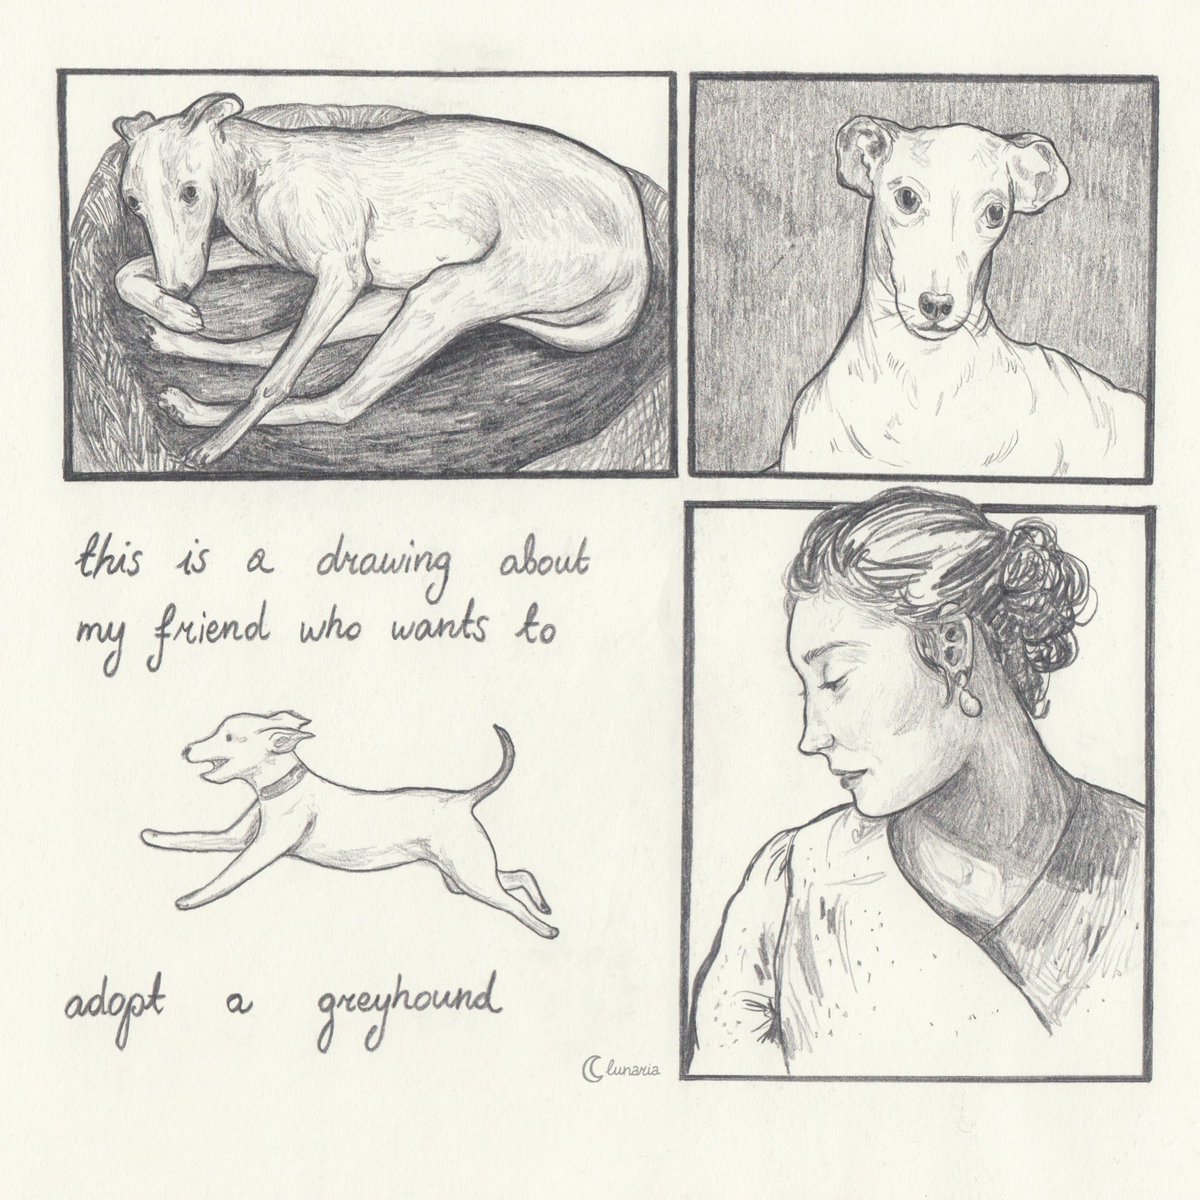 #firstdrawingin2021 ✨
#greyhound #pencilsketch #illustration #graphite #pencilart #newsketchbook #moleskine